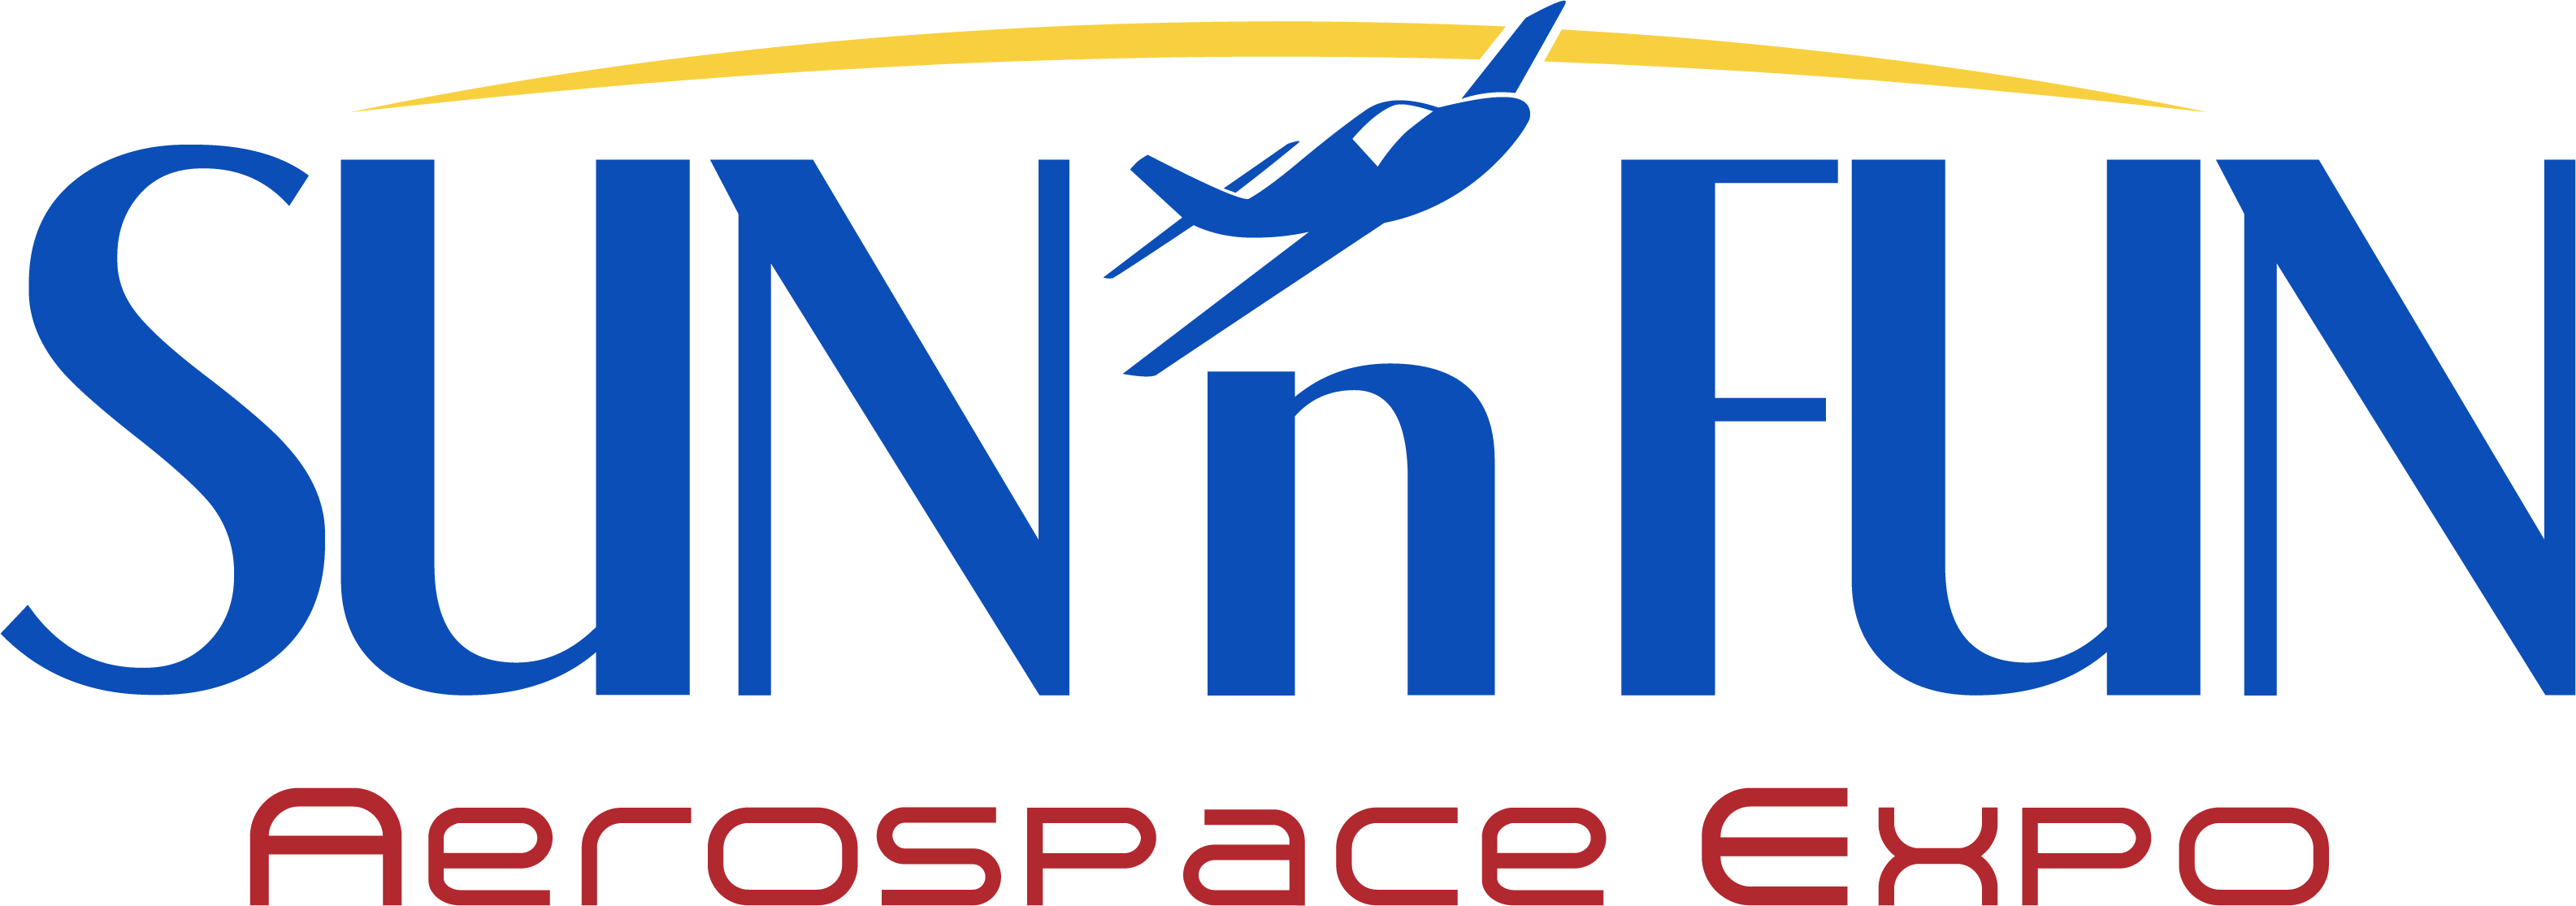 SnF_AerospaceExpo_Logo